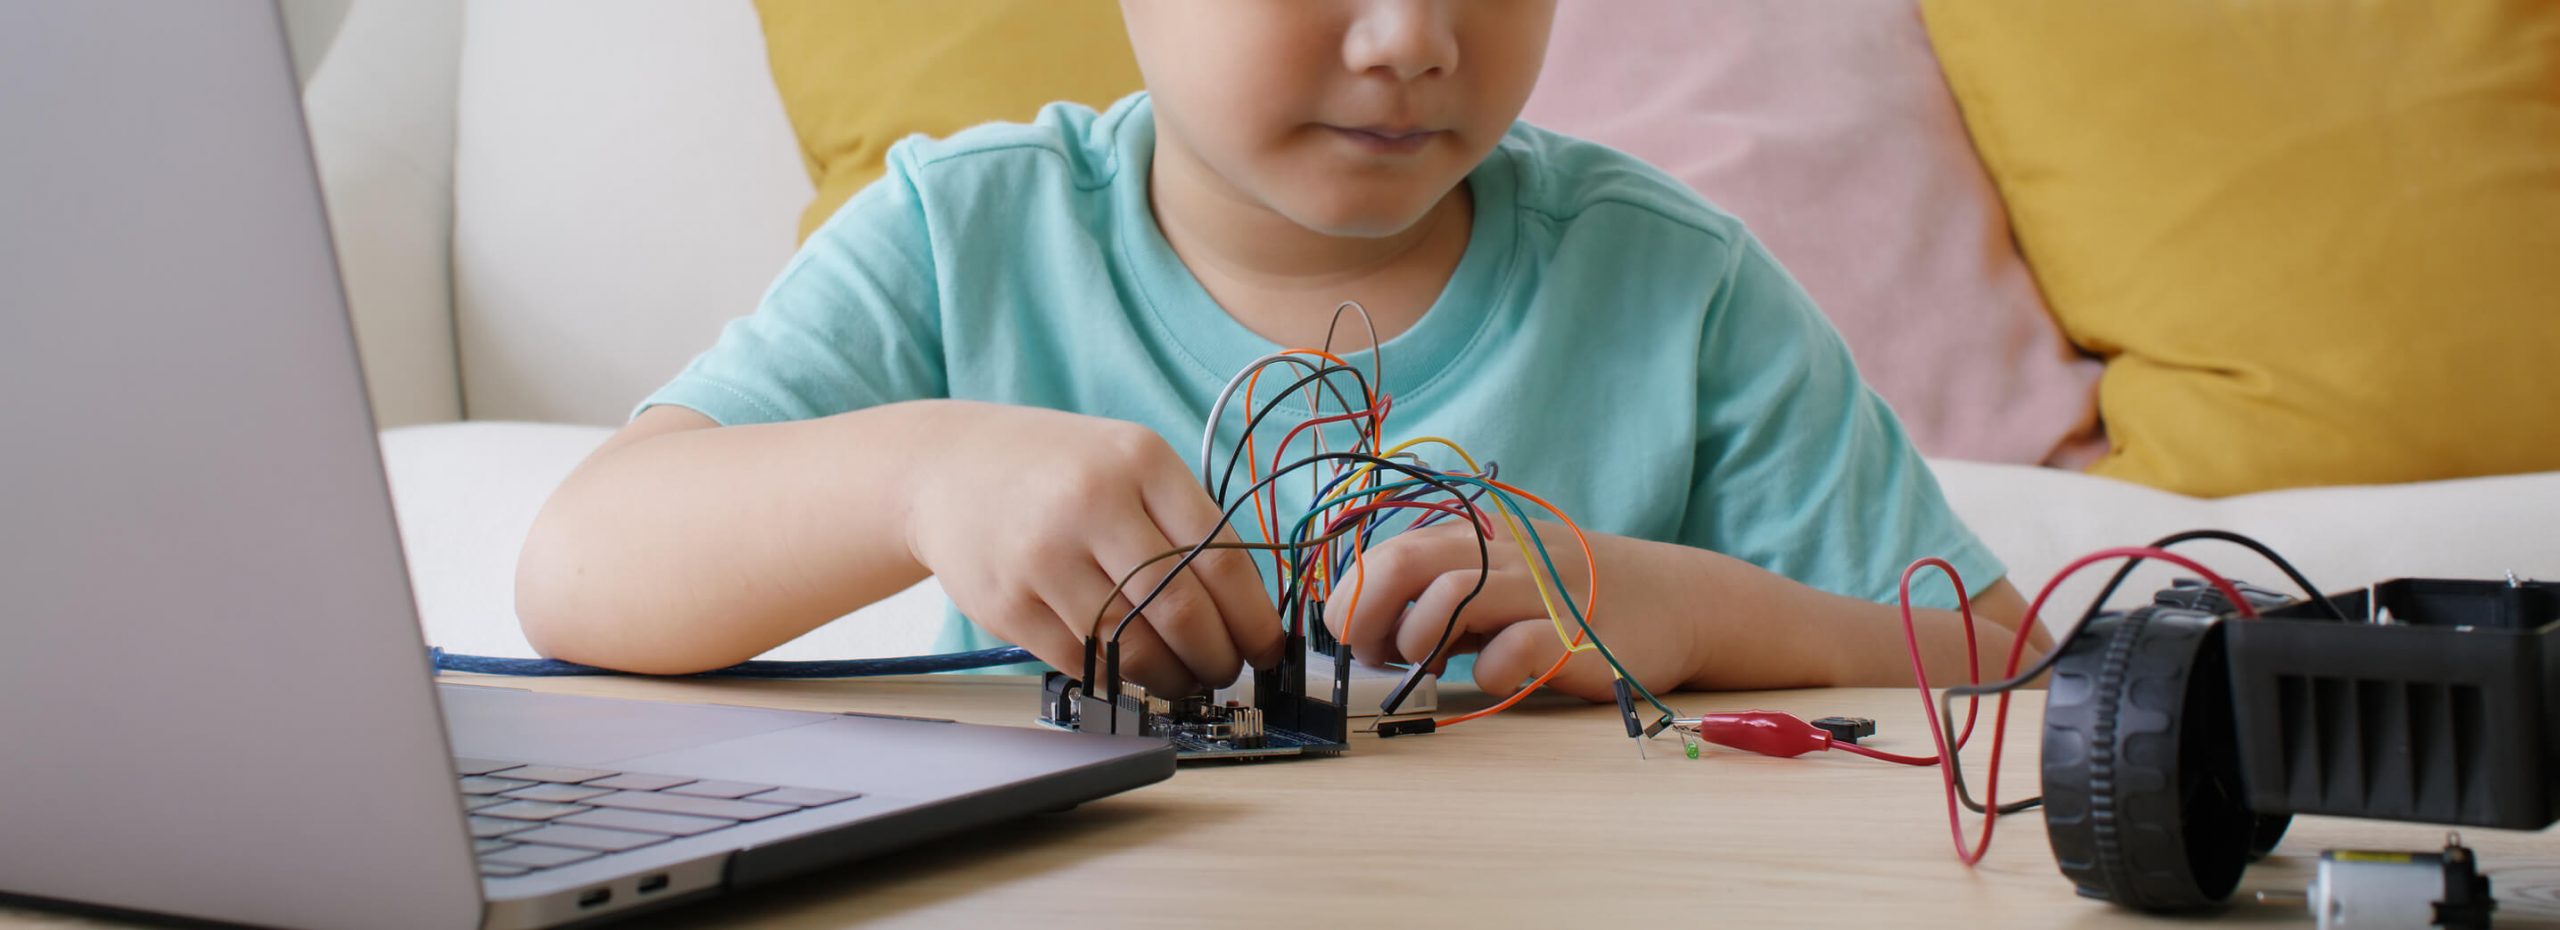 Teaching Kids to Code with a Raspberry Pi